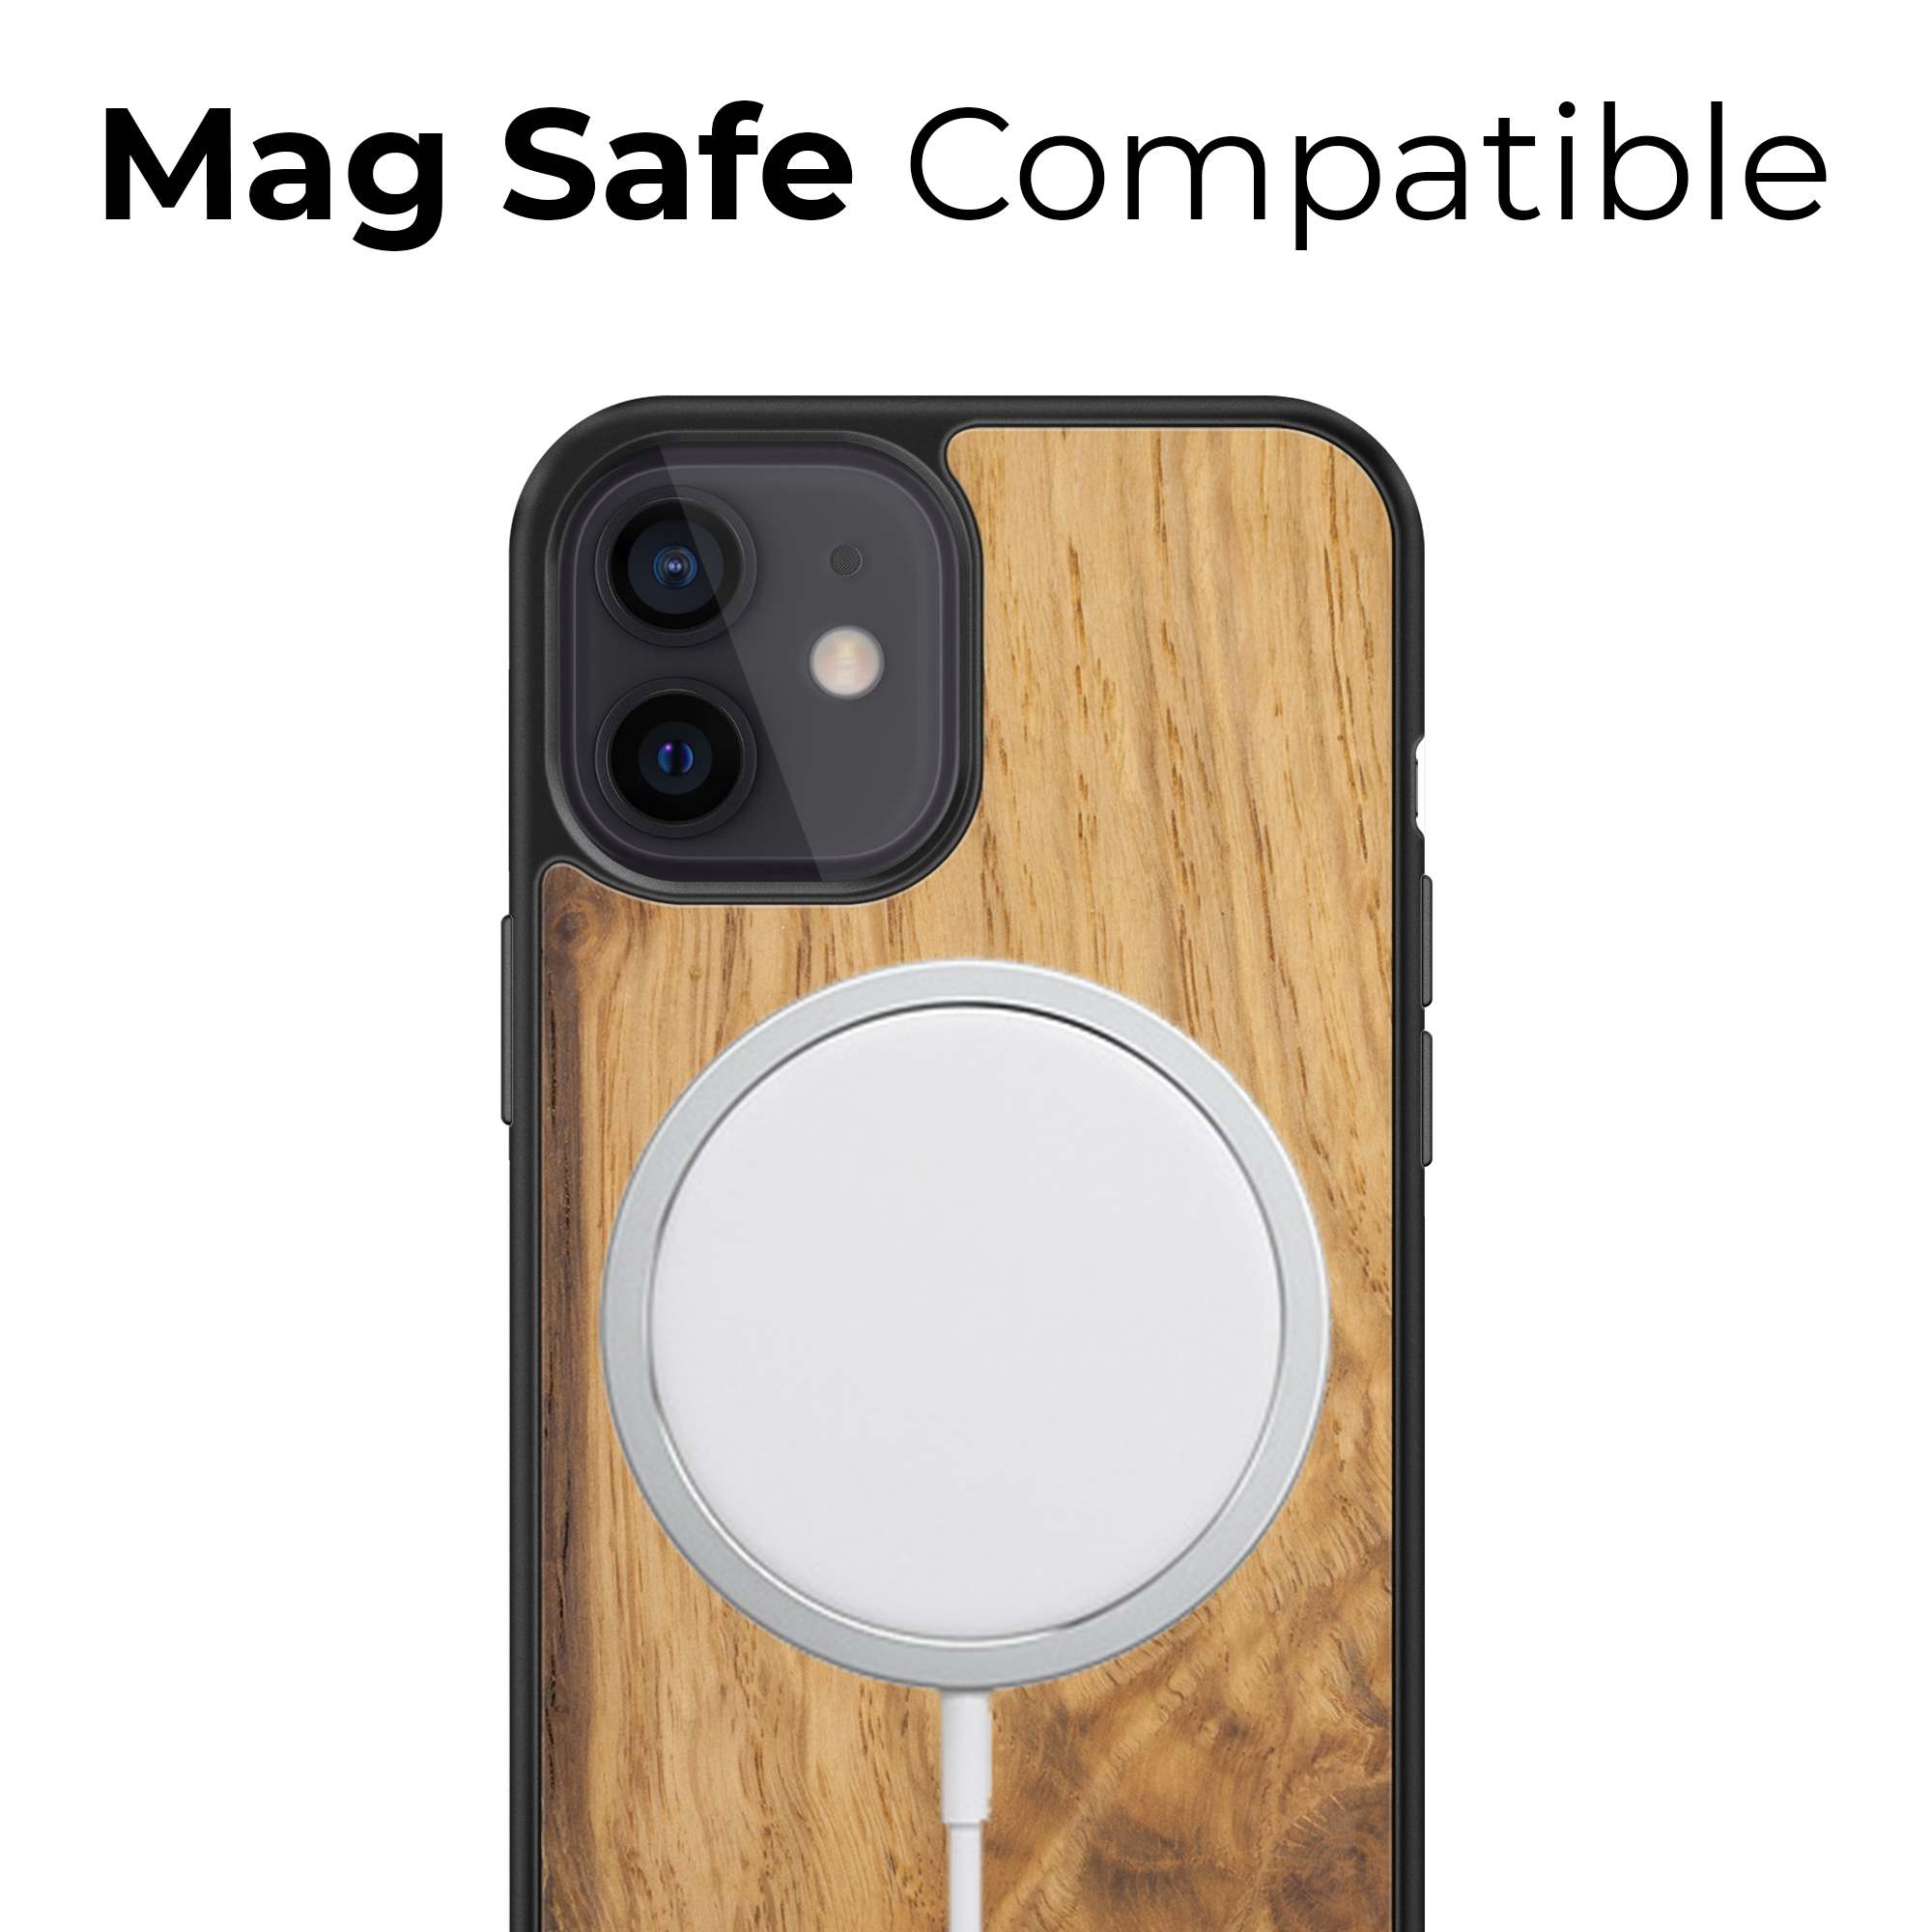 Mag safe Venice Lion Phone Case